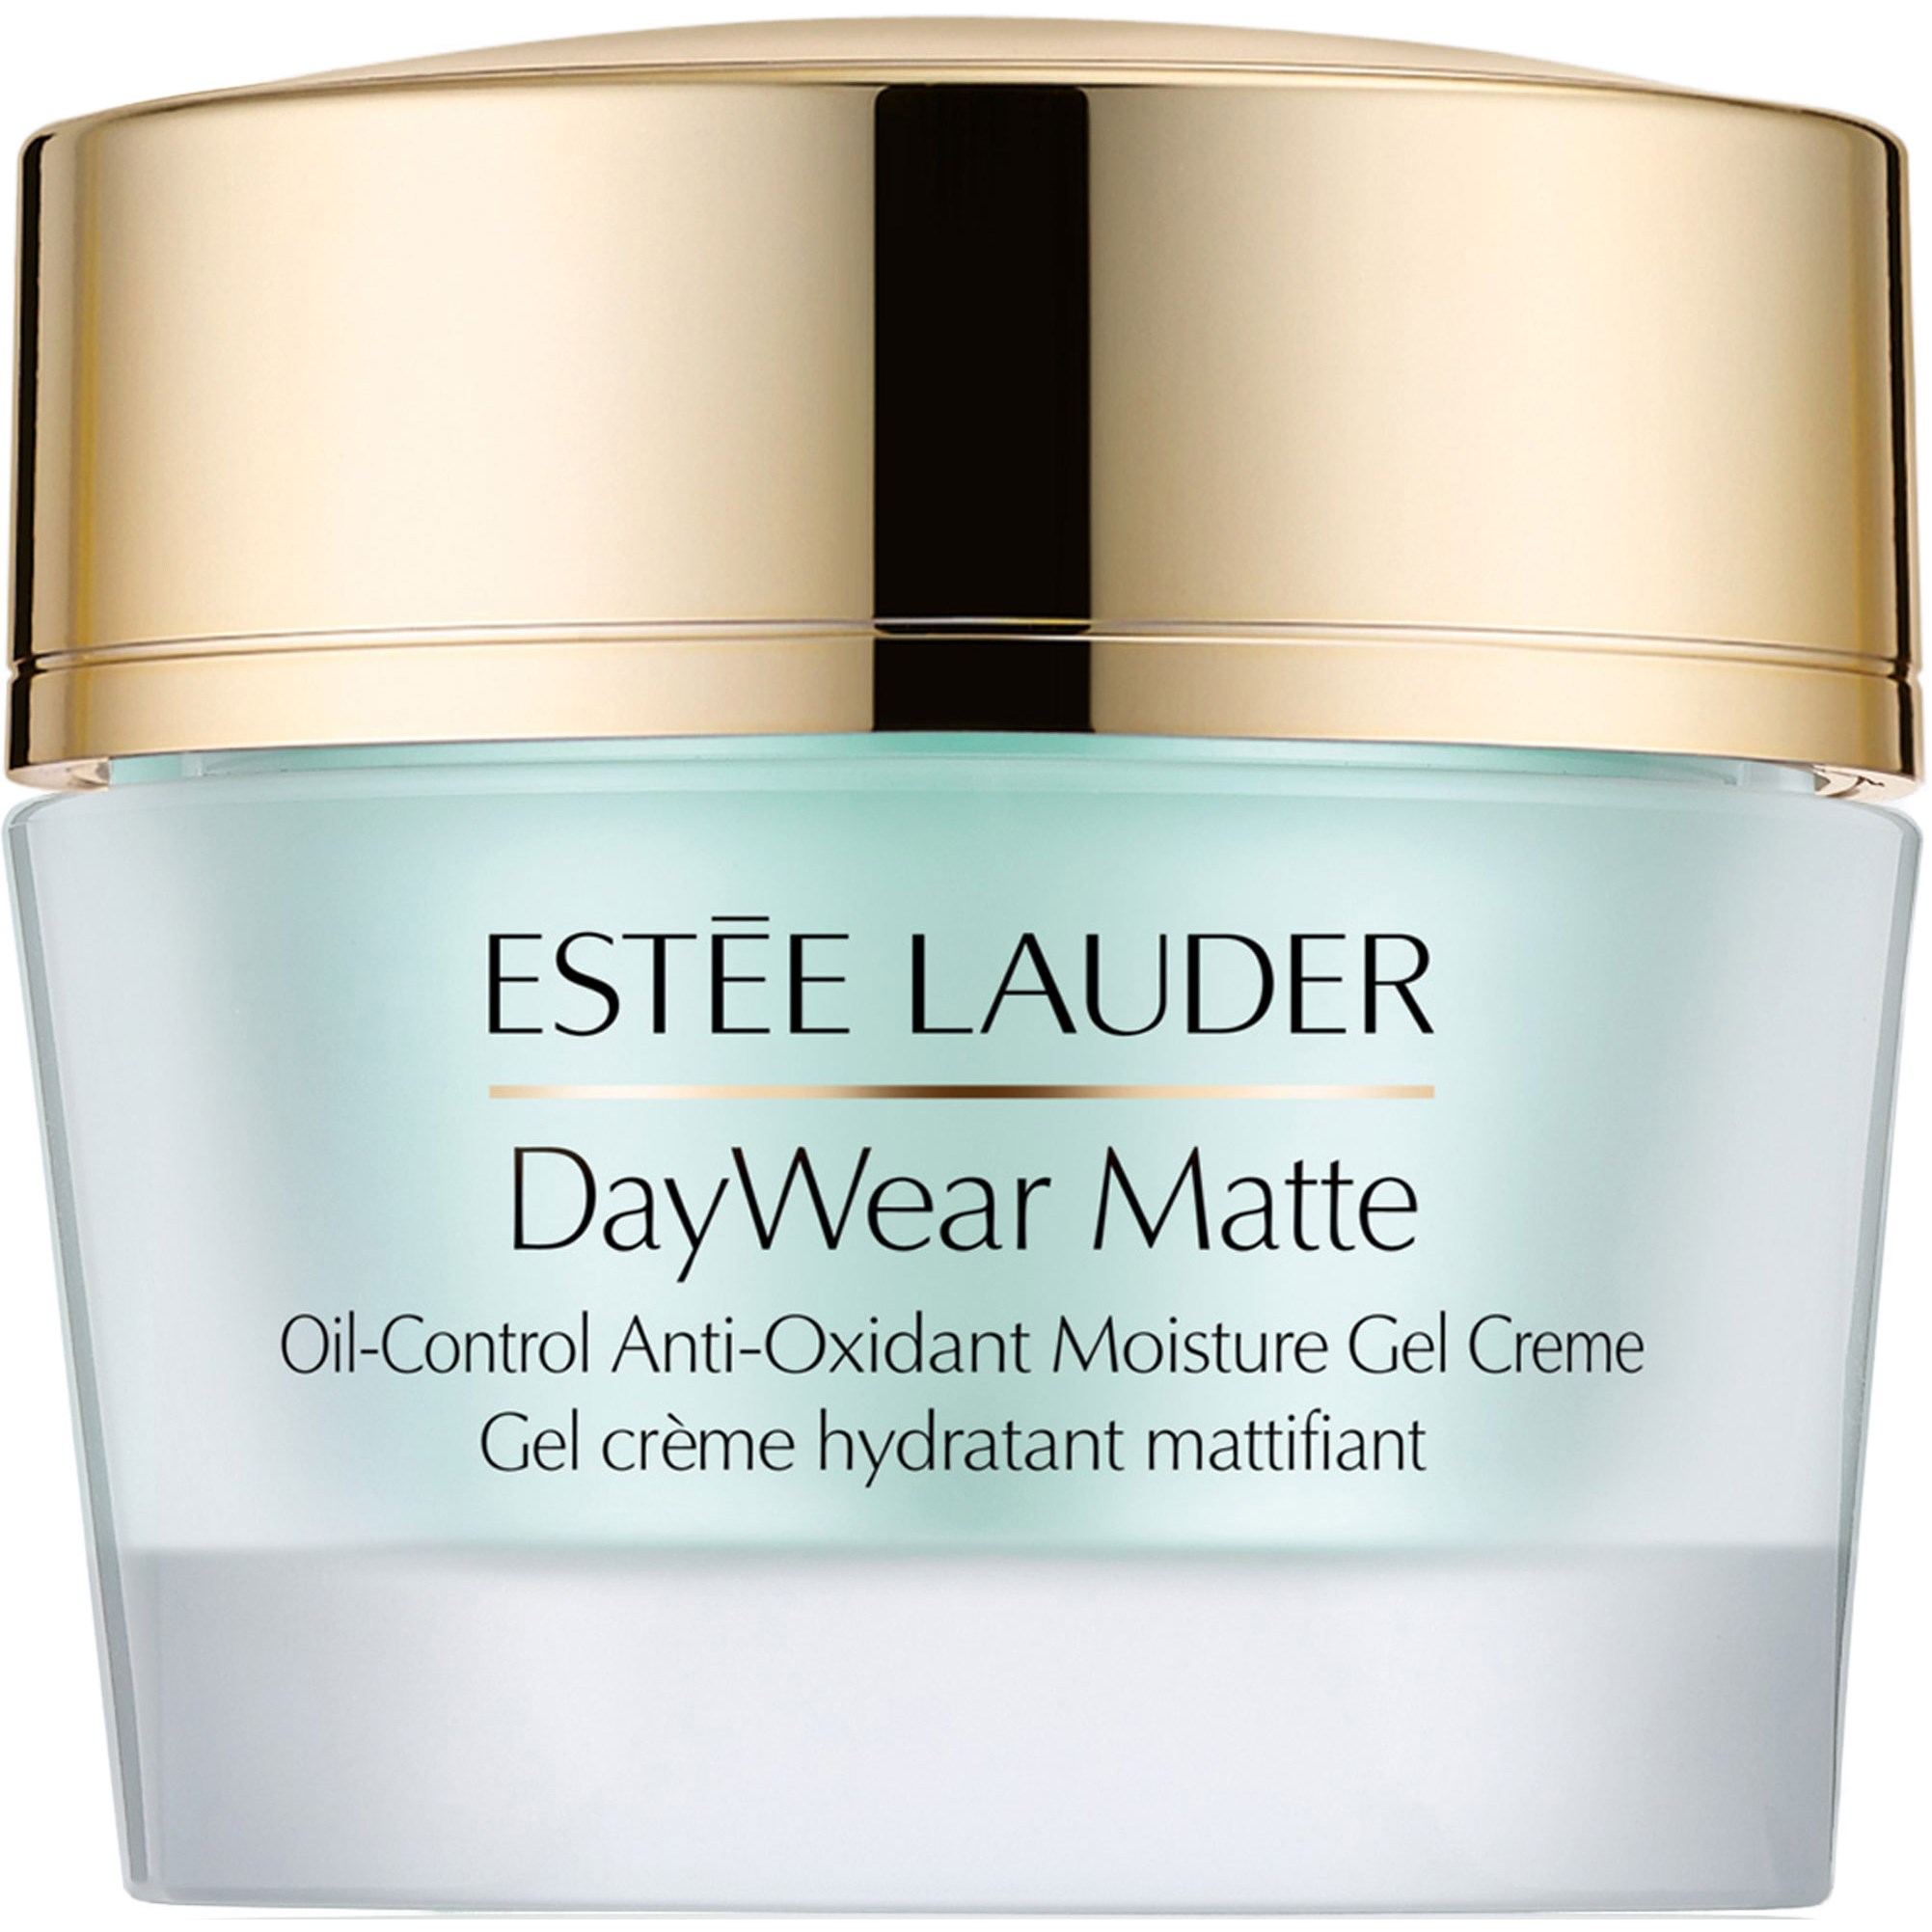 Bilde av Estée Lauder Daywear Matte Oilcontrol Antioxidant Moisture Gel Creme 5